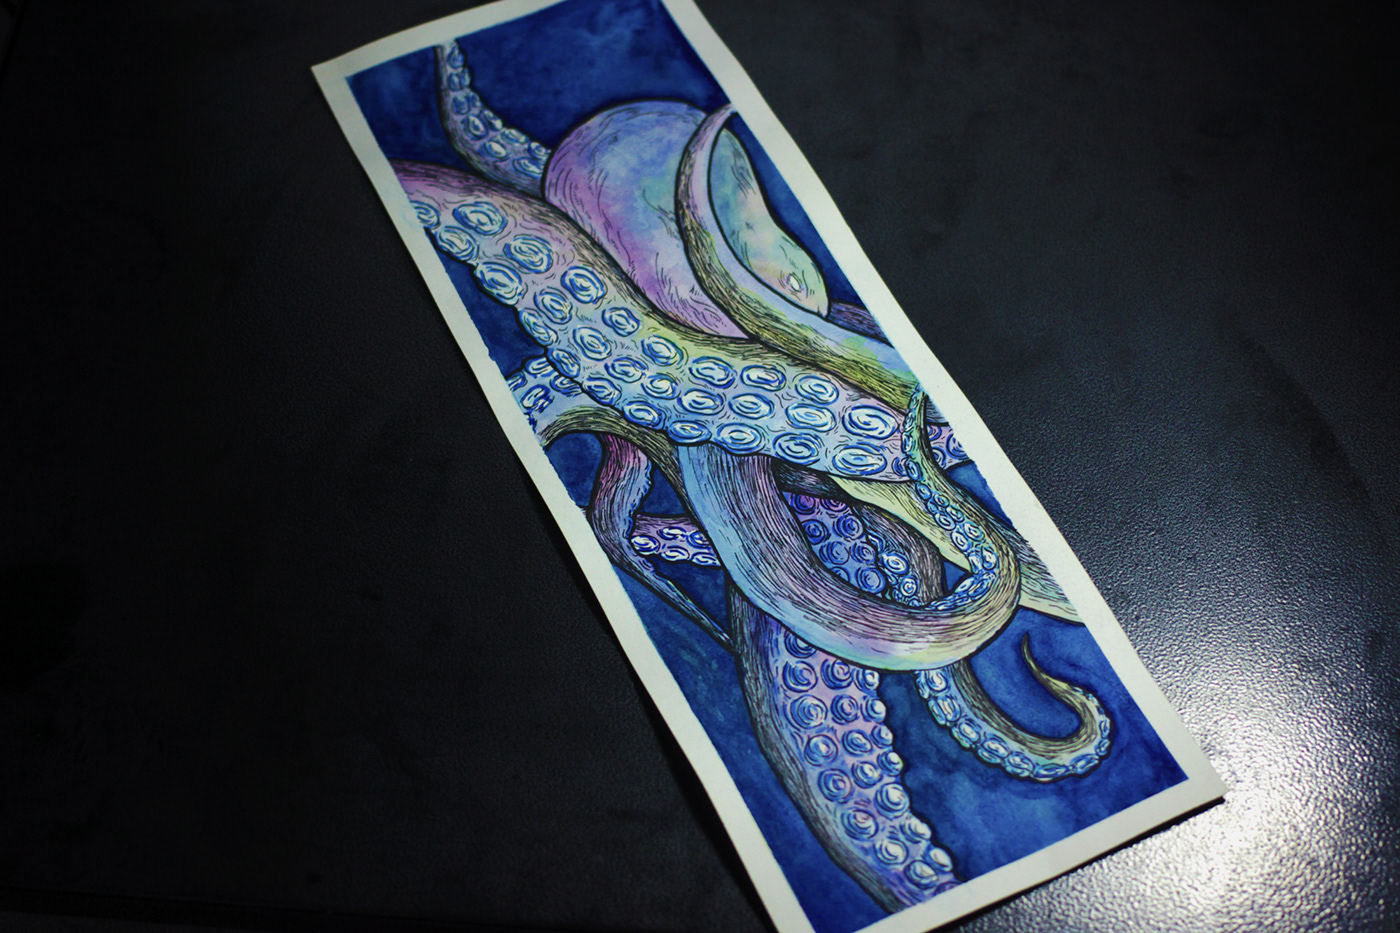 Scandinavia nordic etymology monster ocean keeper sea creature octopus pena hitam dark art hand drawing